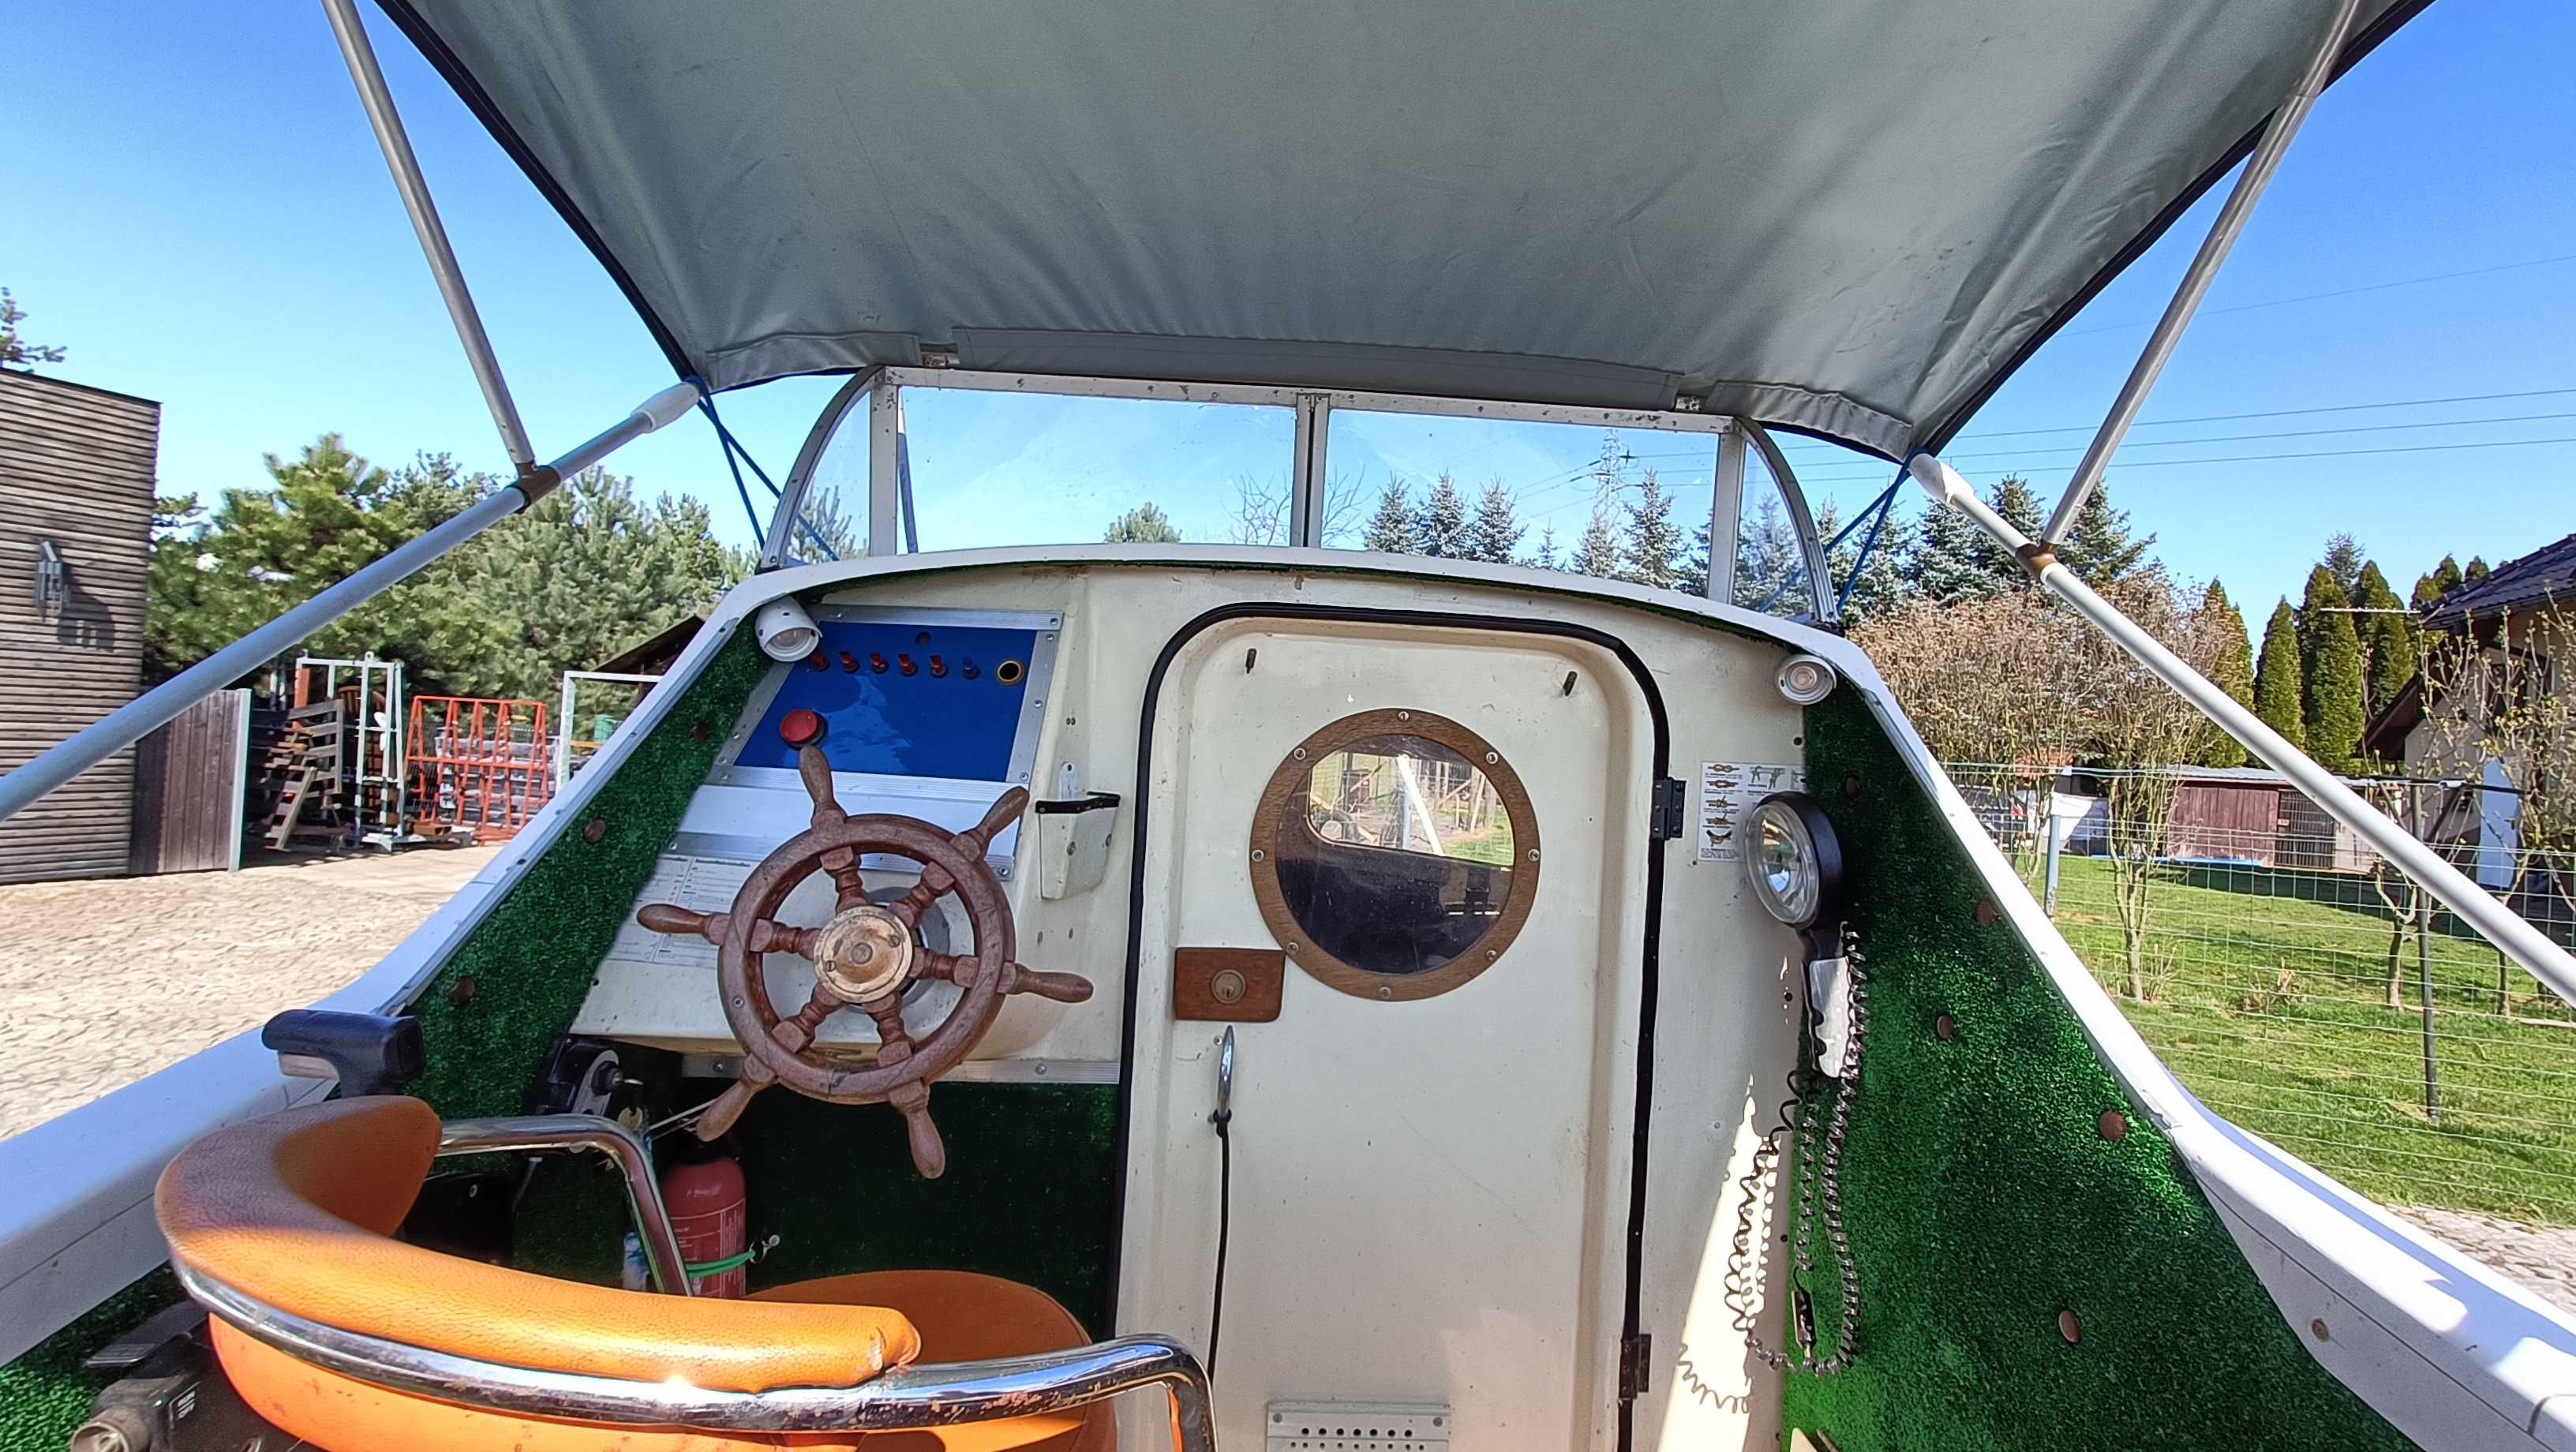 Motorówka łódka  kabinowa silnik mercury